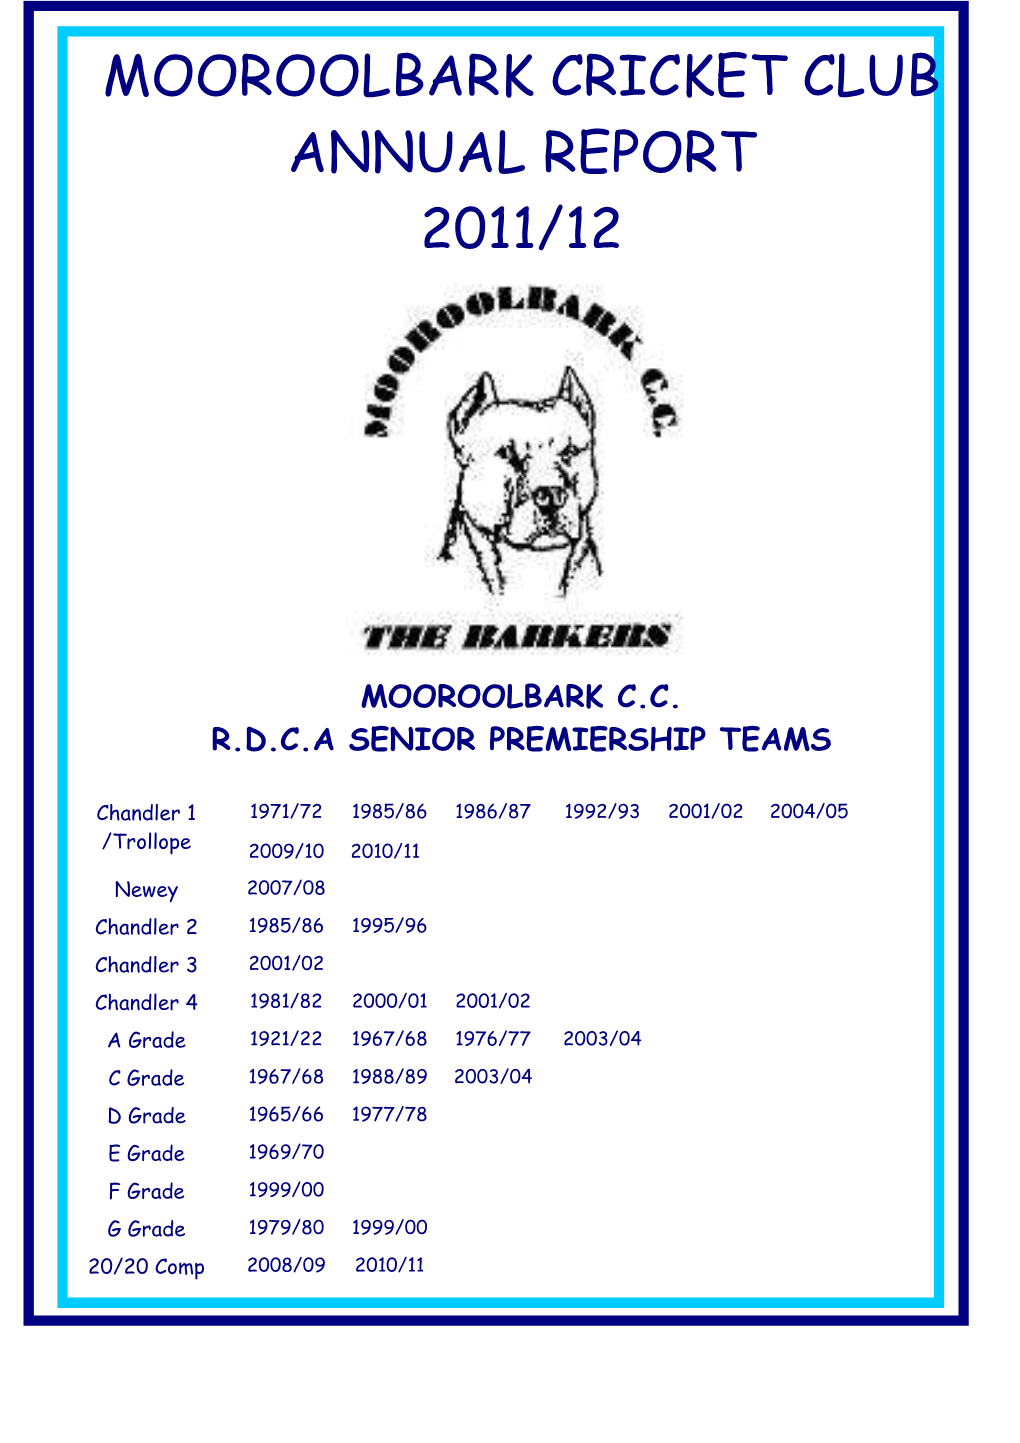 Mooroolbark Cricket Club Annual Report 2011/12